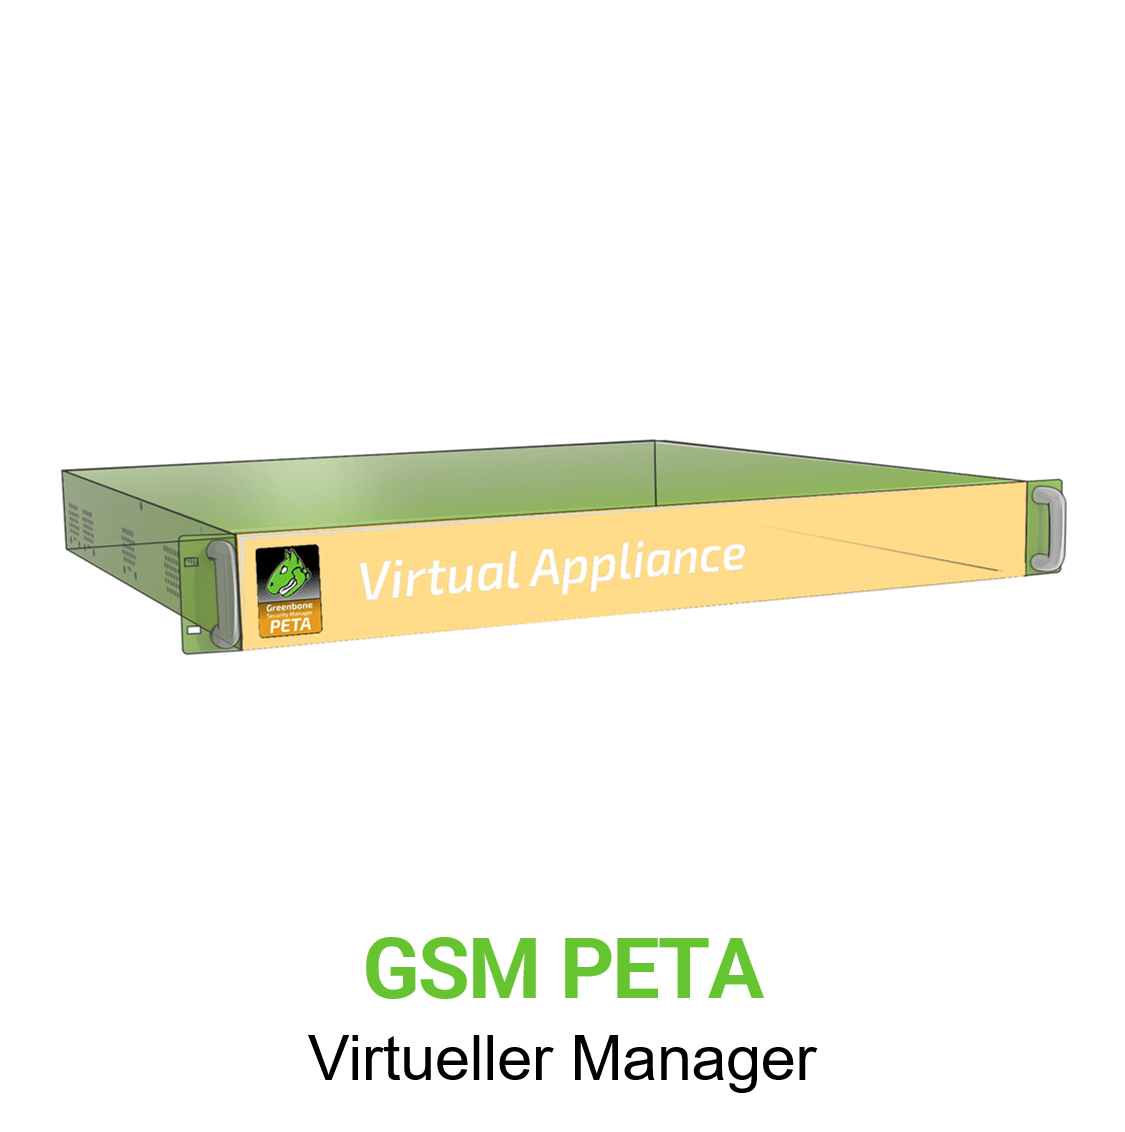 Greenbone Enterprise GSM PETA Virtuelle Appliance